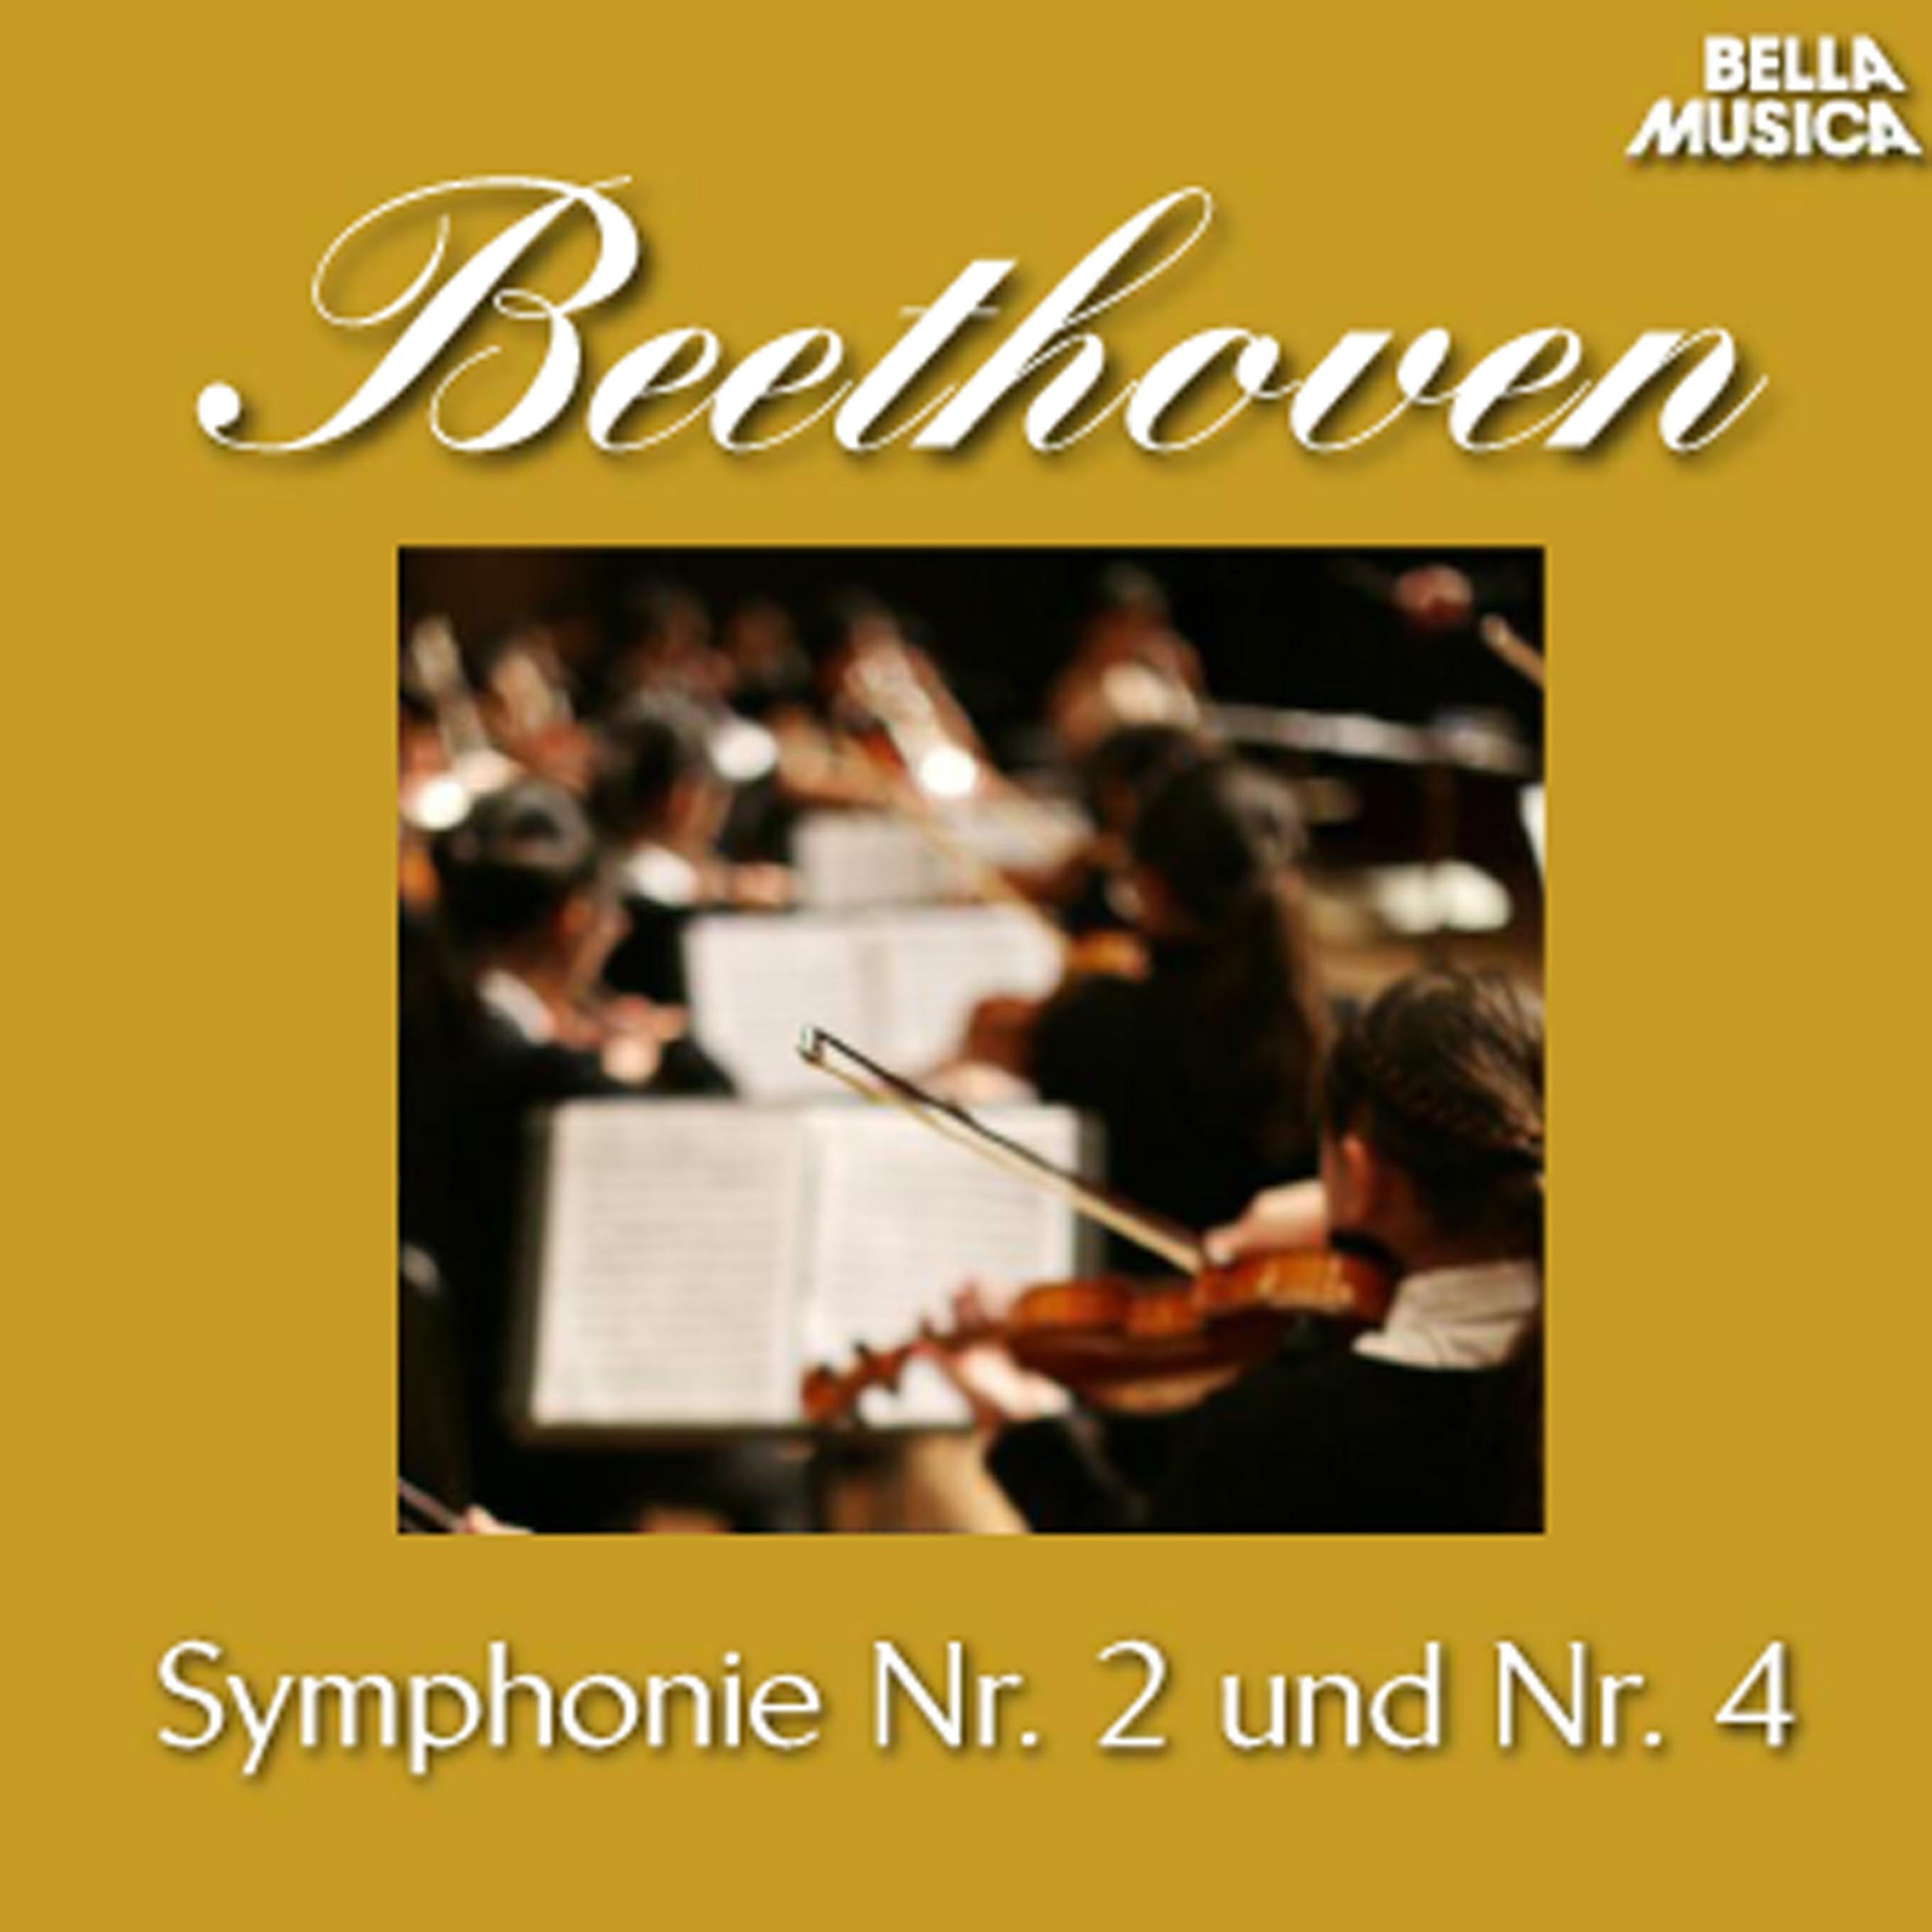 Sinfonie No. 4 fü r Orchester in BFlat Major, Op. 60: III. Menuetto  Allegro vivace